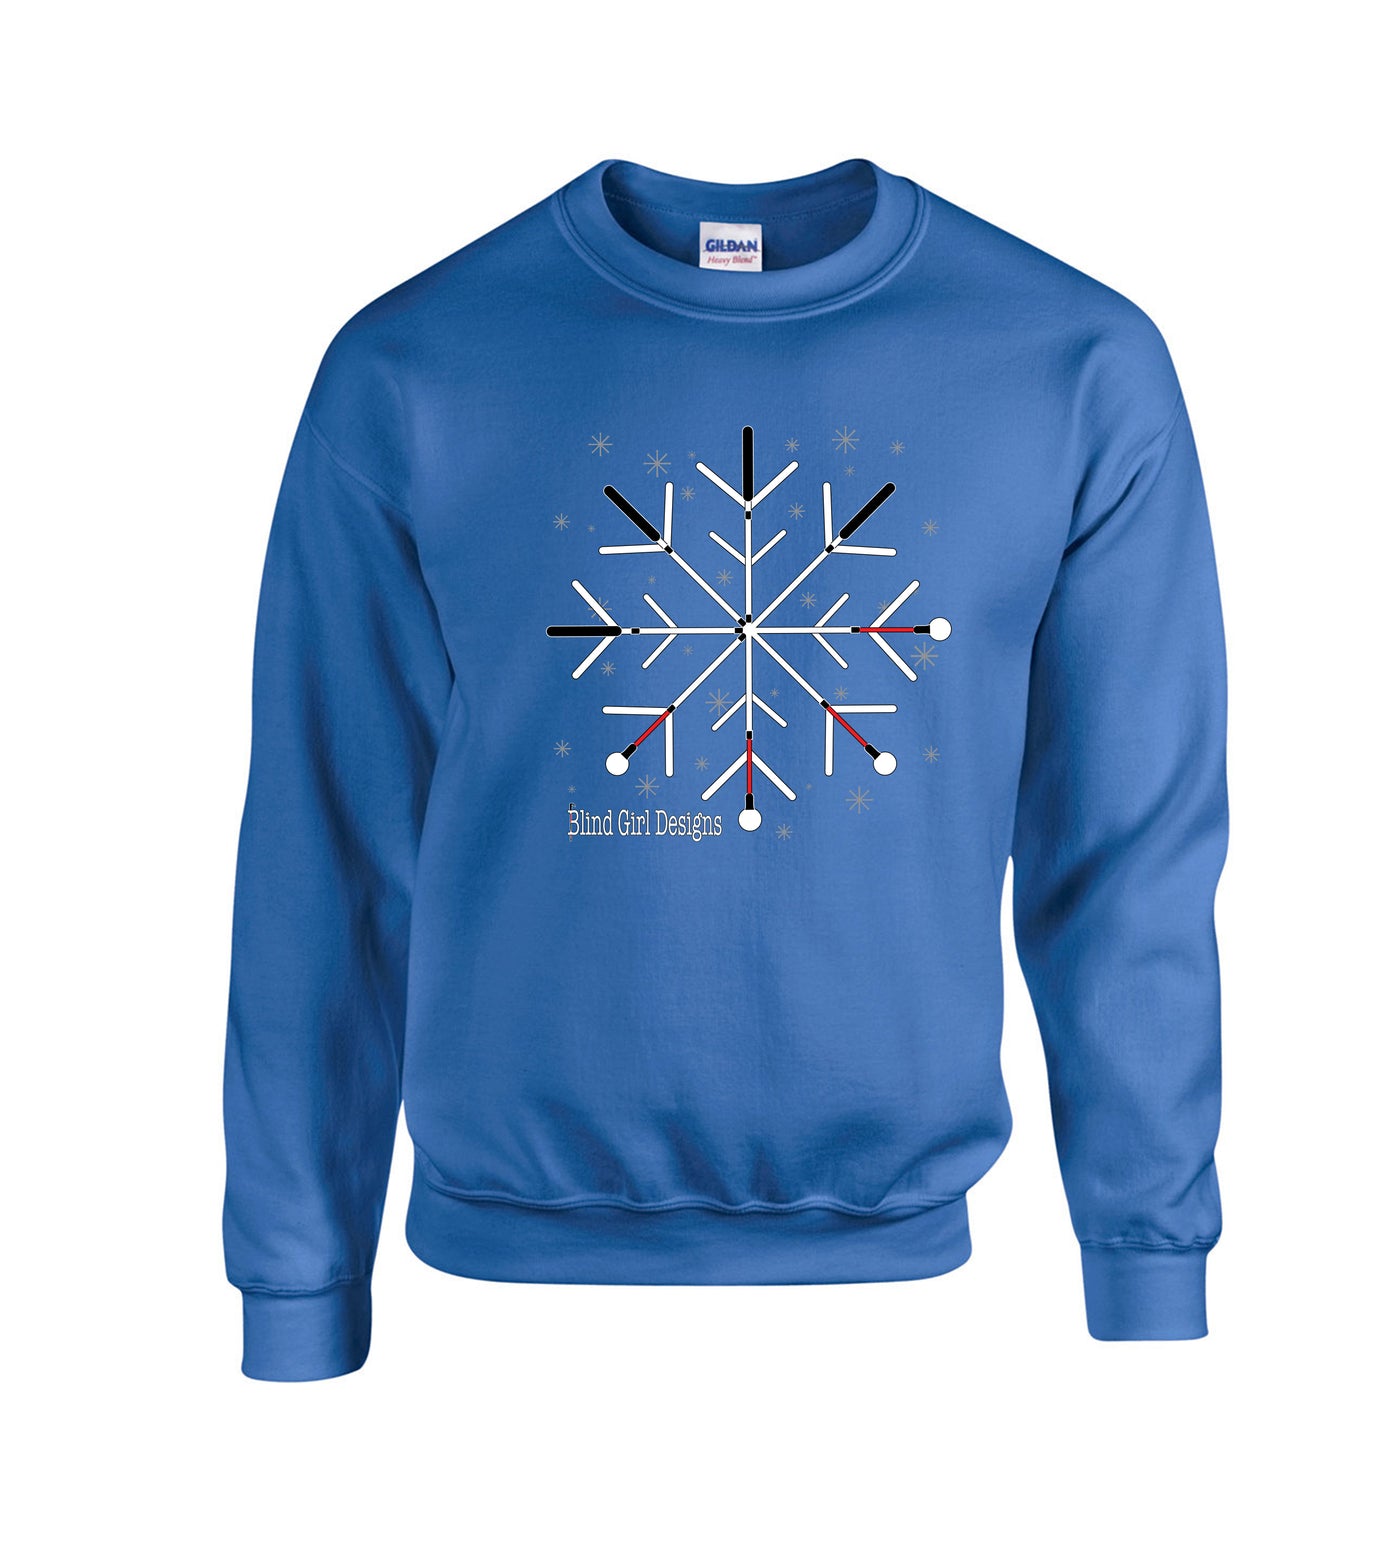 Original Snowflake White Cane Crew Sweatshirt - Royal Blue